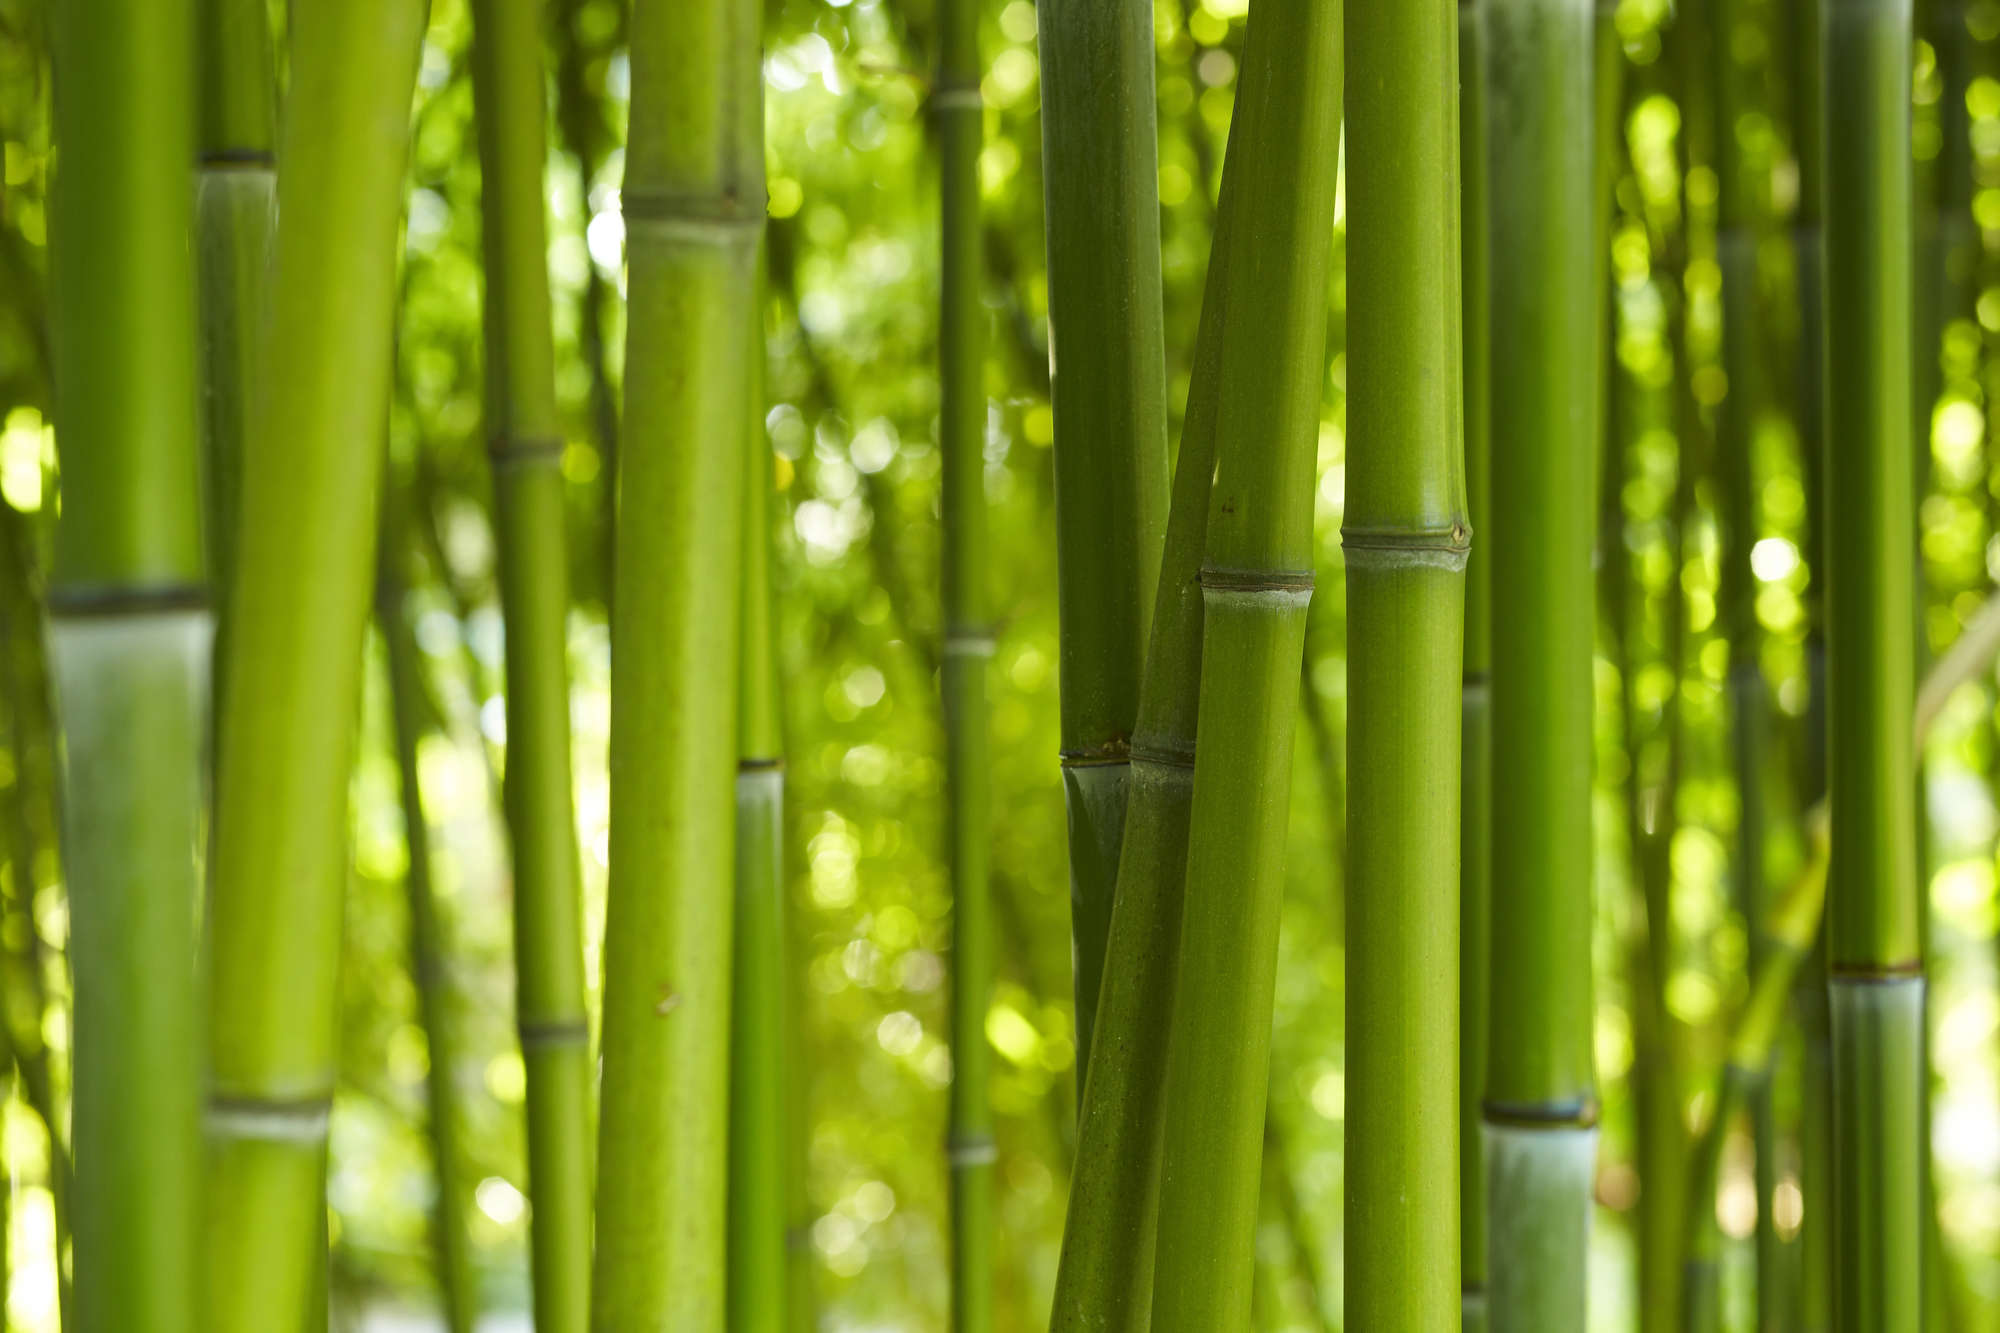             Carta da parati natura bambù primo piano su tessuto non tessuto testurizzato
        